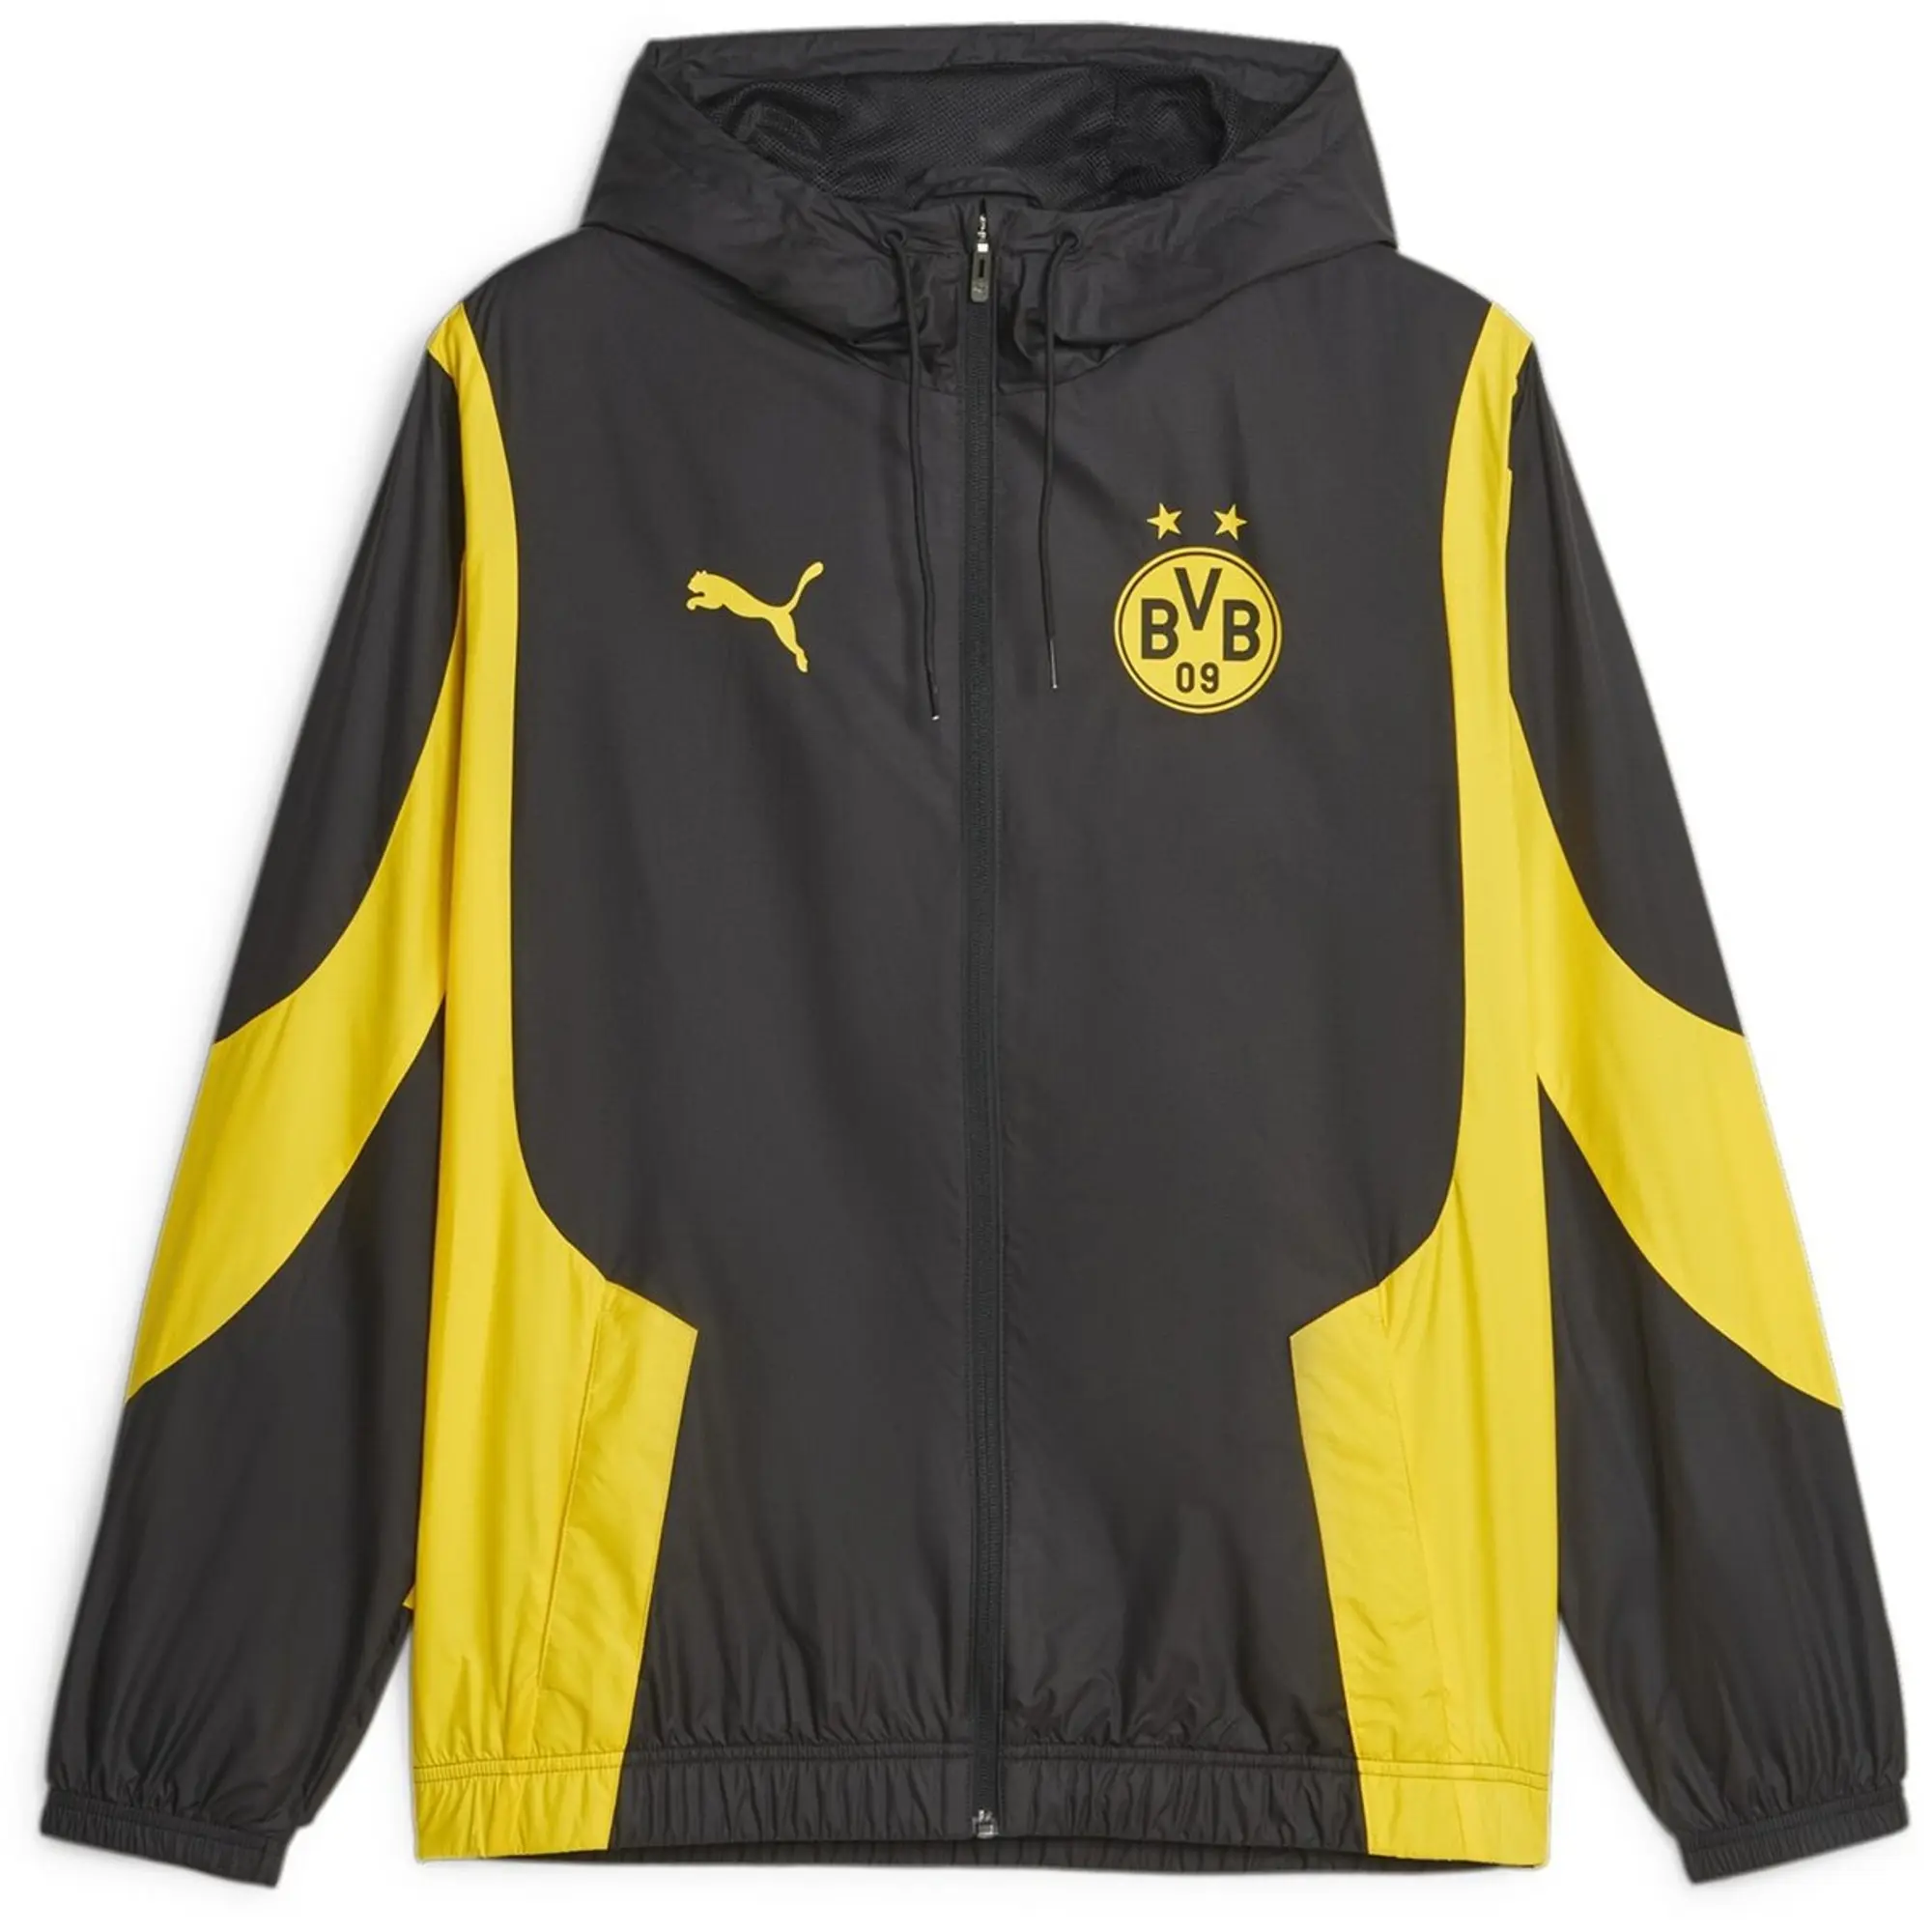 PUMA Borussia Dortmund Men's Pre-Match Football Jacket, Black/Cyber Yellow